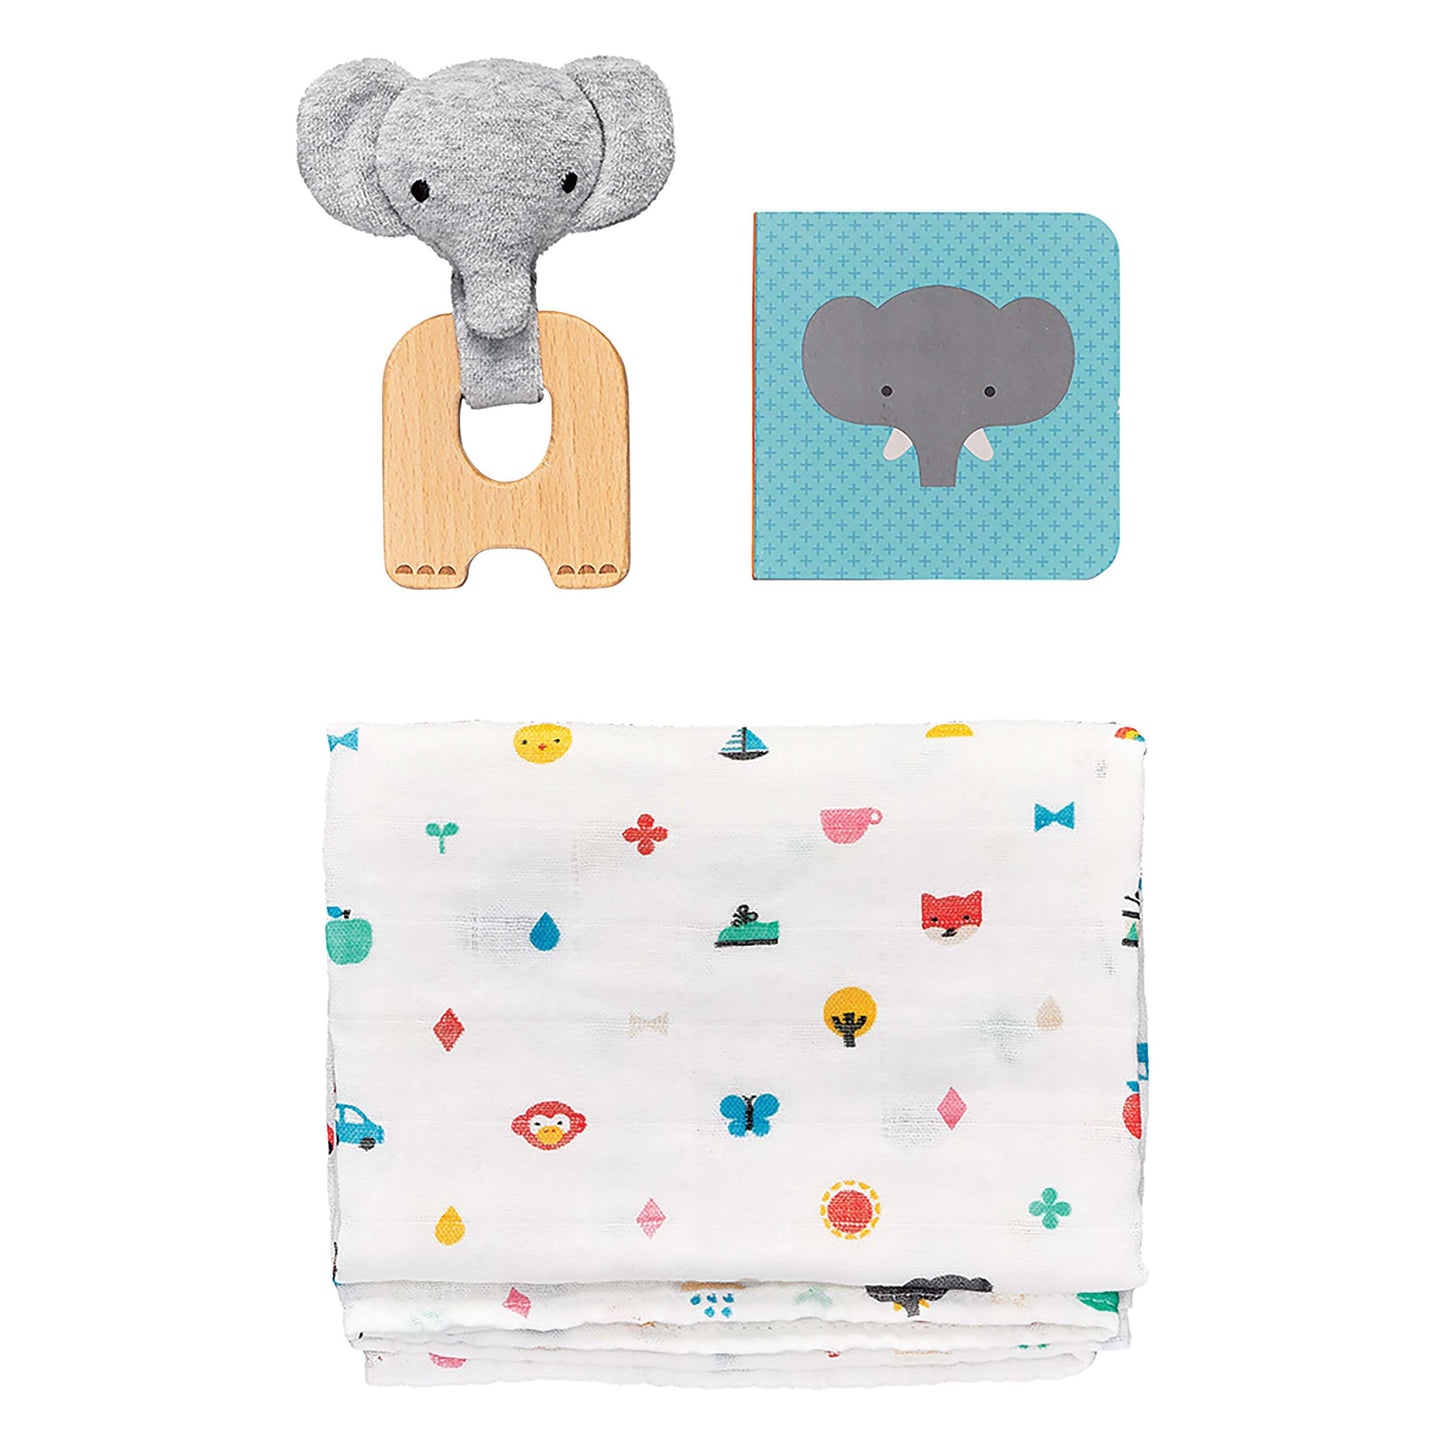 Petit Collage Baby Gift Set - Little Elephant